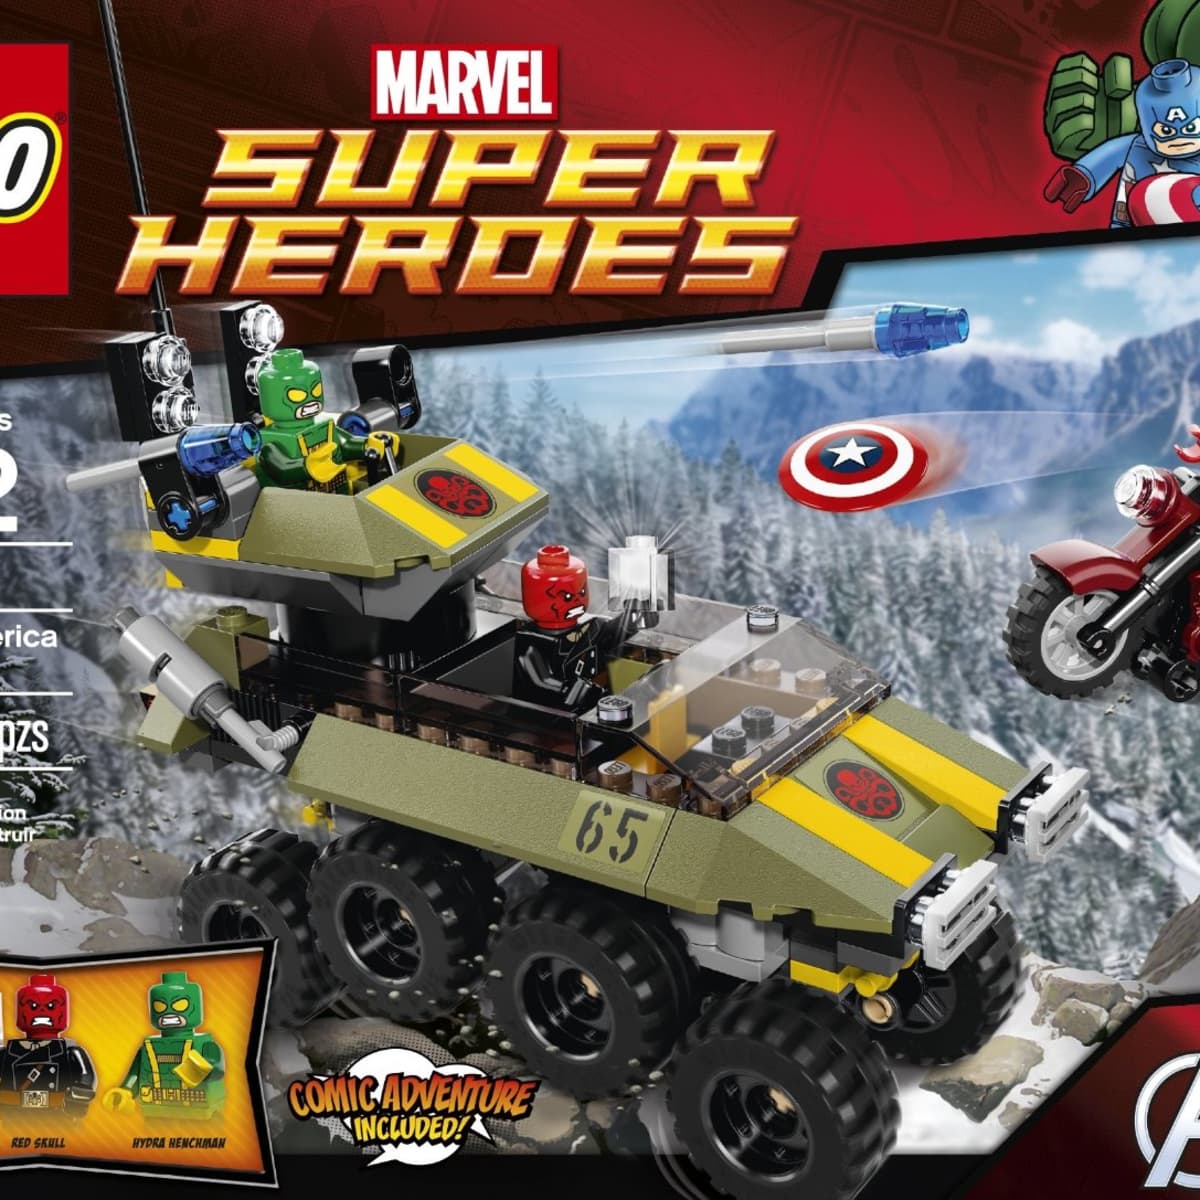 Lego MINIFIGURE Super Hero Star Lord Rocket Raccoon Dark Red Outfit -   Israel